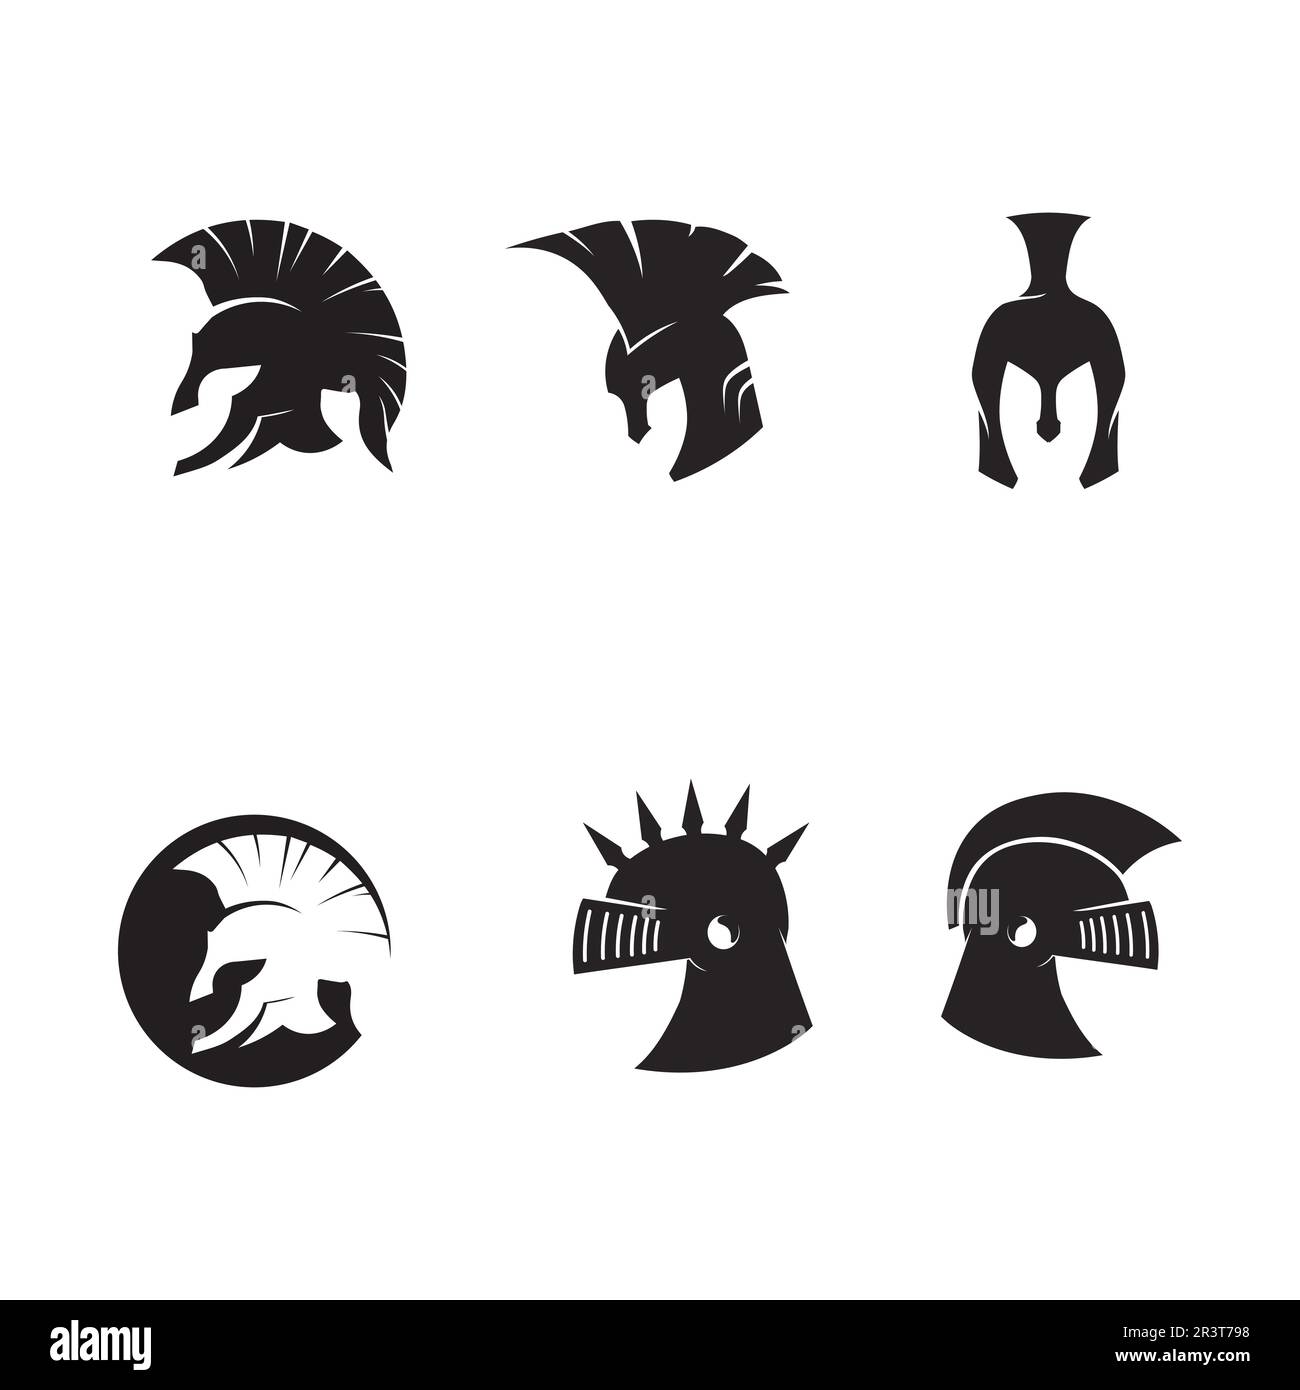 spartan and gladiator logo icon designs vector Stock Vector